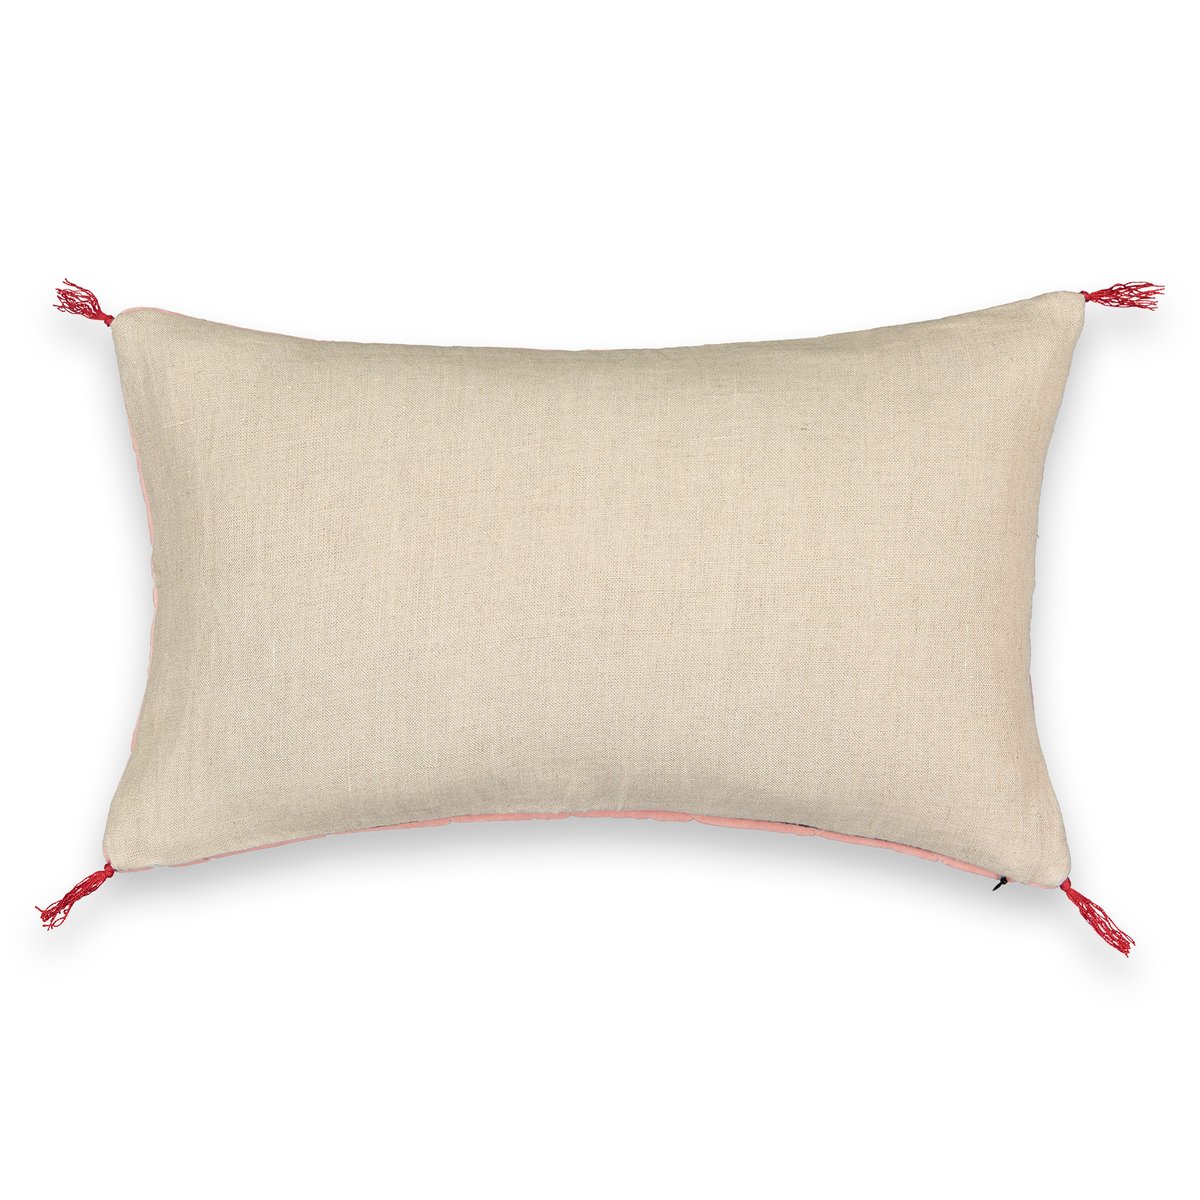 Чехол La Redoute Для подушки из велюра Chaacha 50 x 30 см розовый, размер 50 x 30 см - фото 2